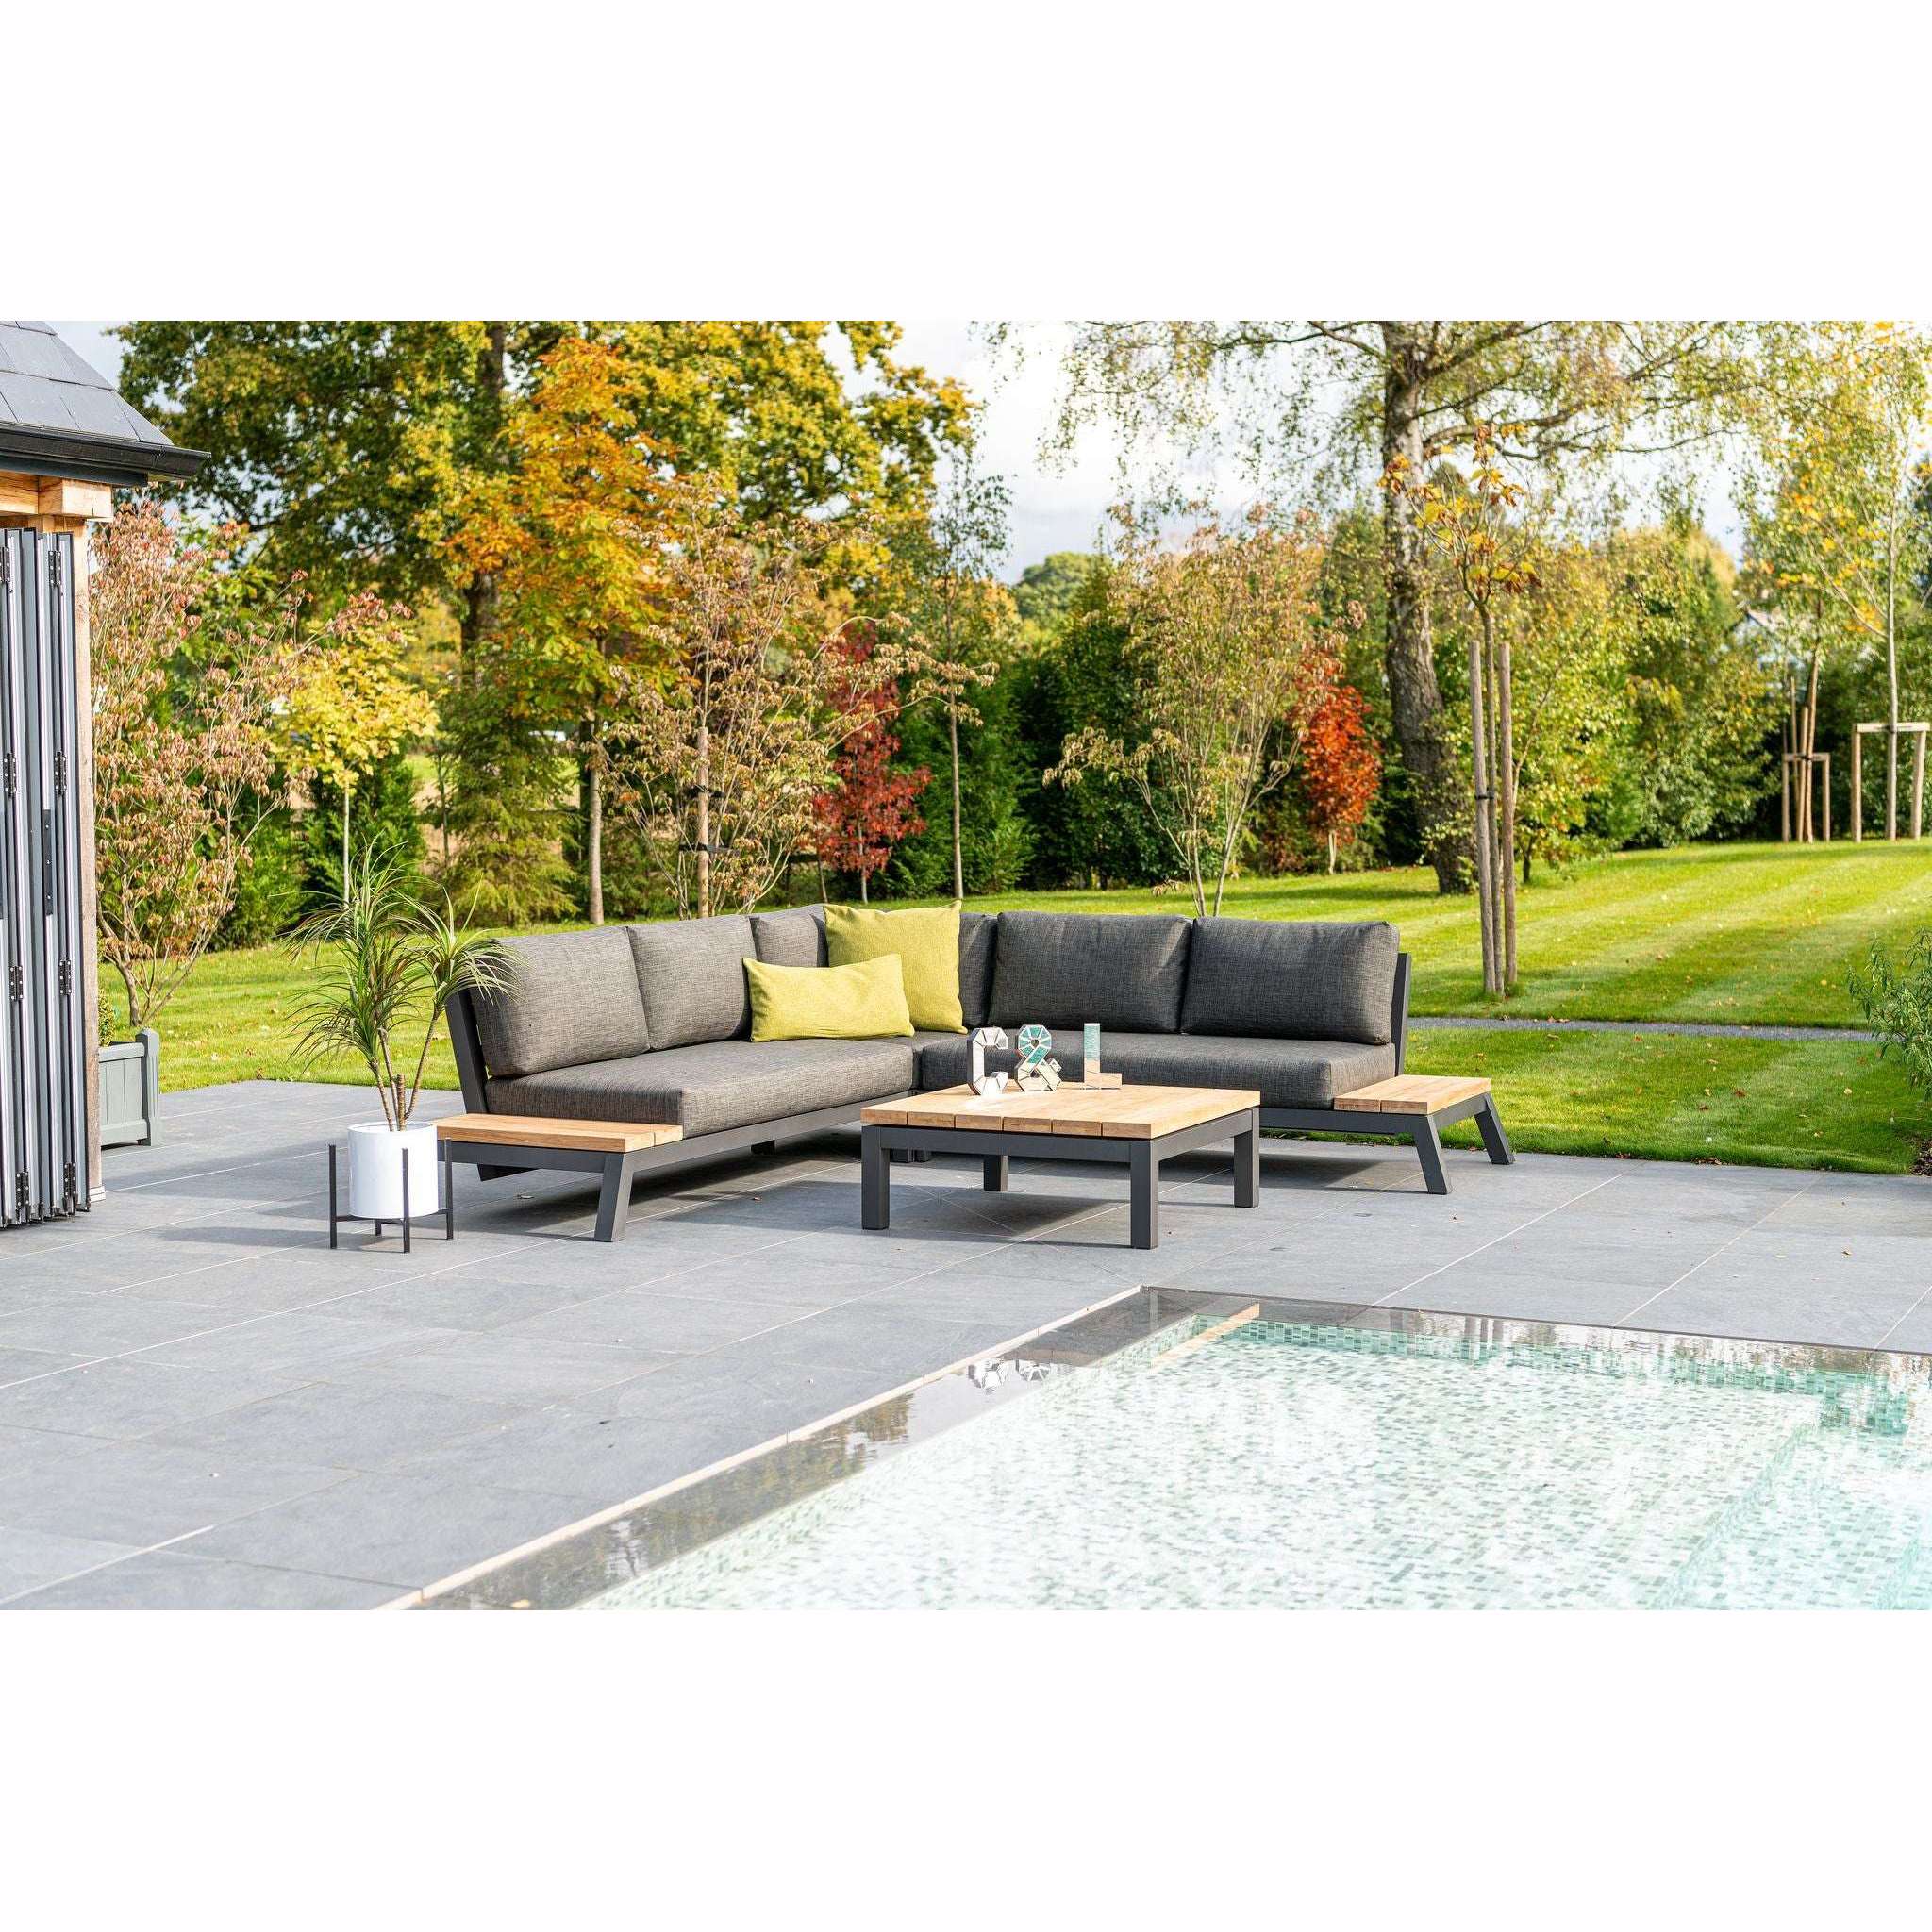 Exceptional Garden:4 Seasons Outdoor Empire Corner Sofa Set with 120cm Capitol Teak Coffee Table